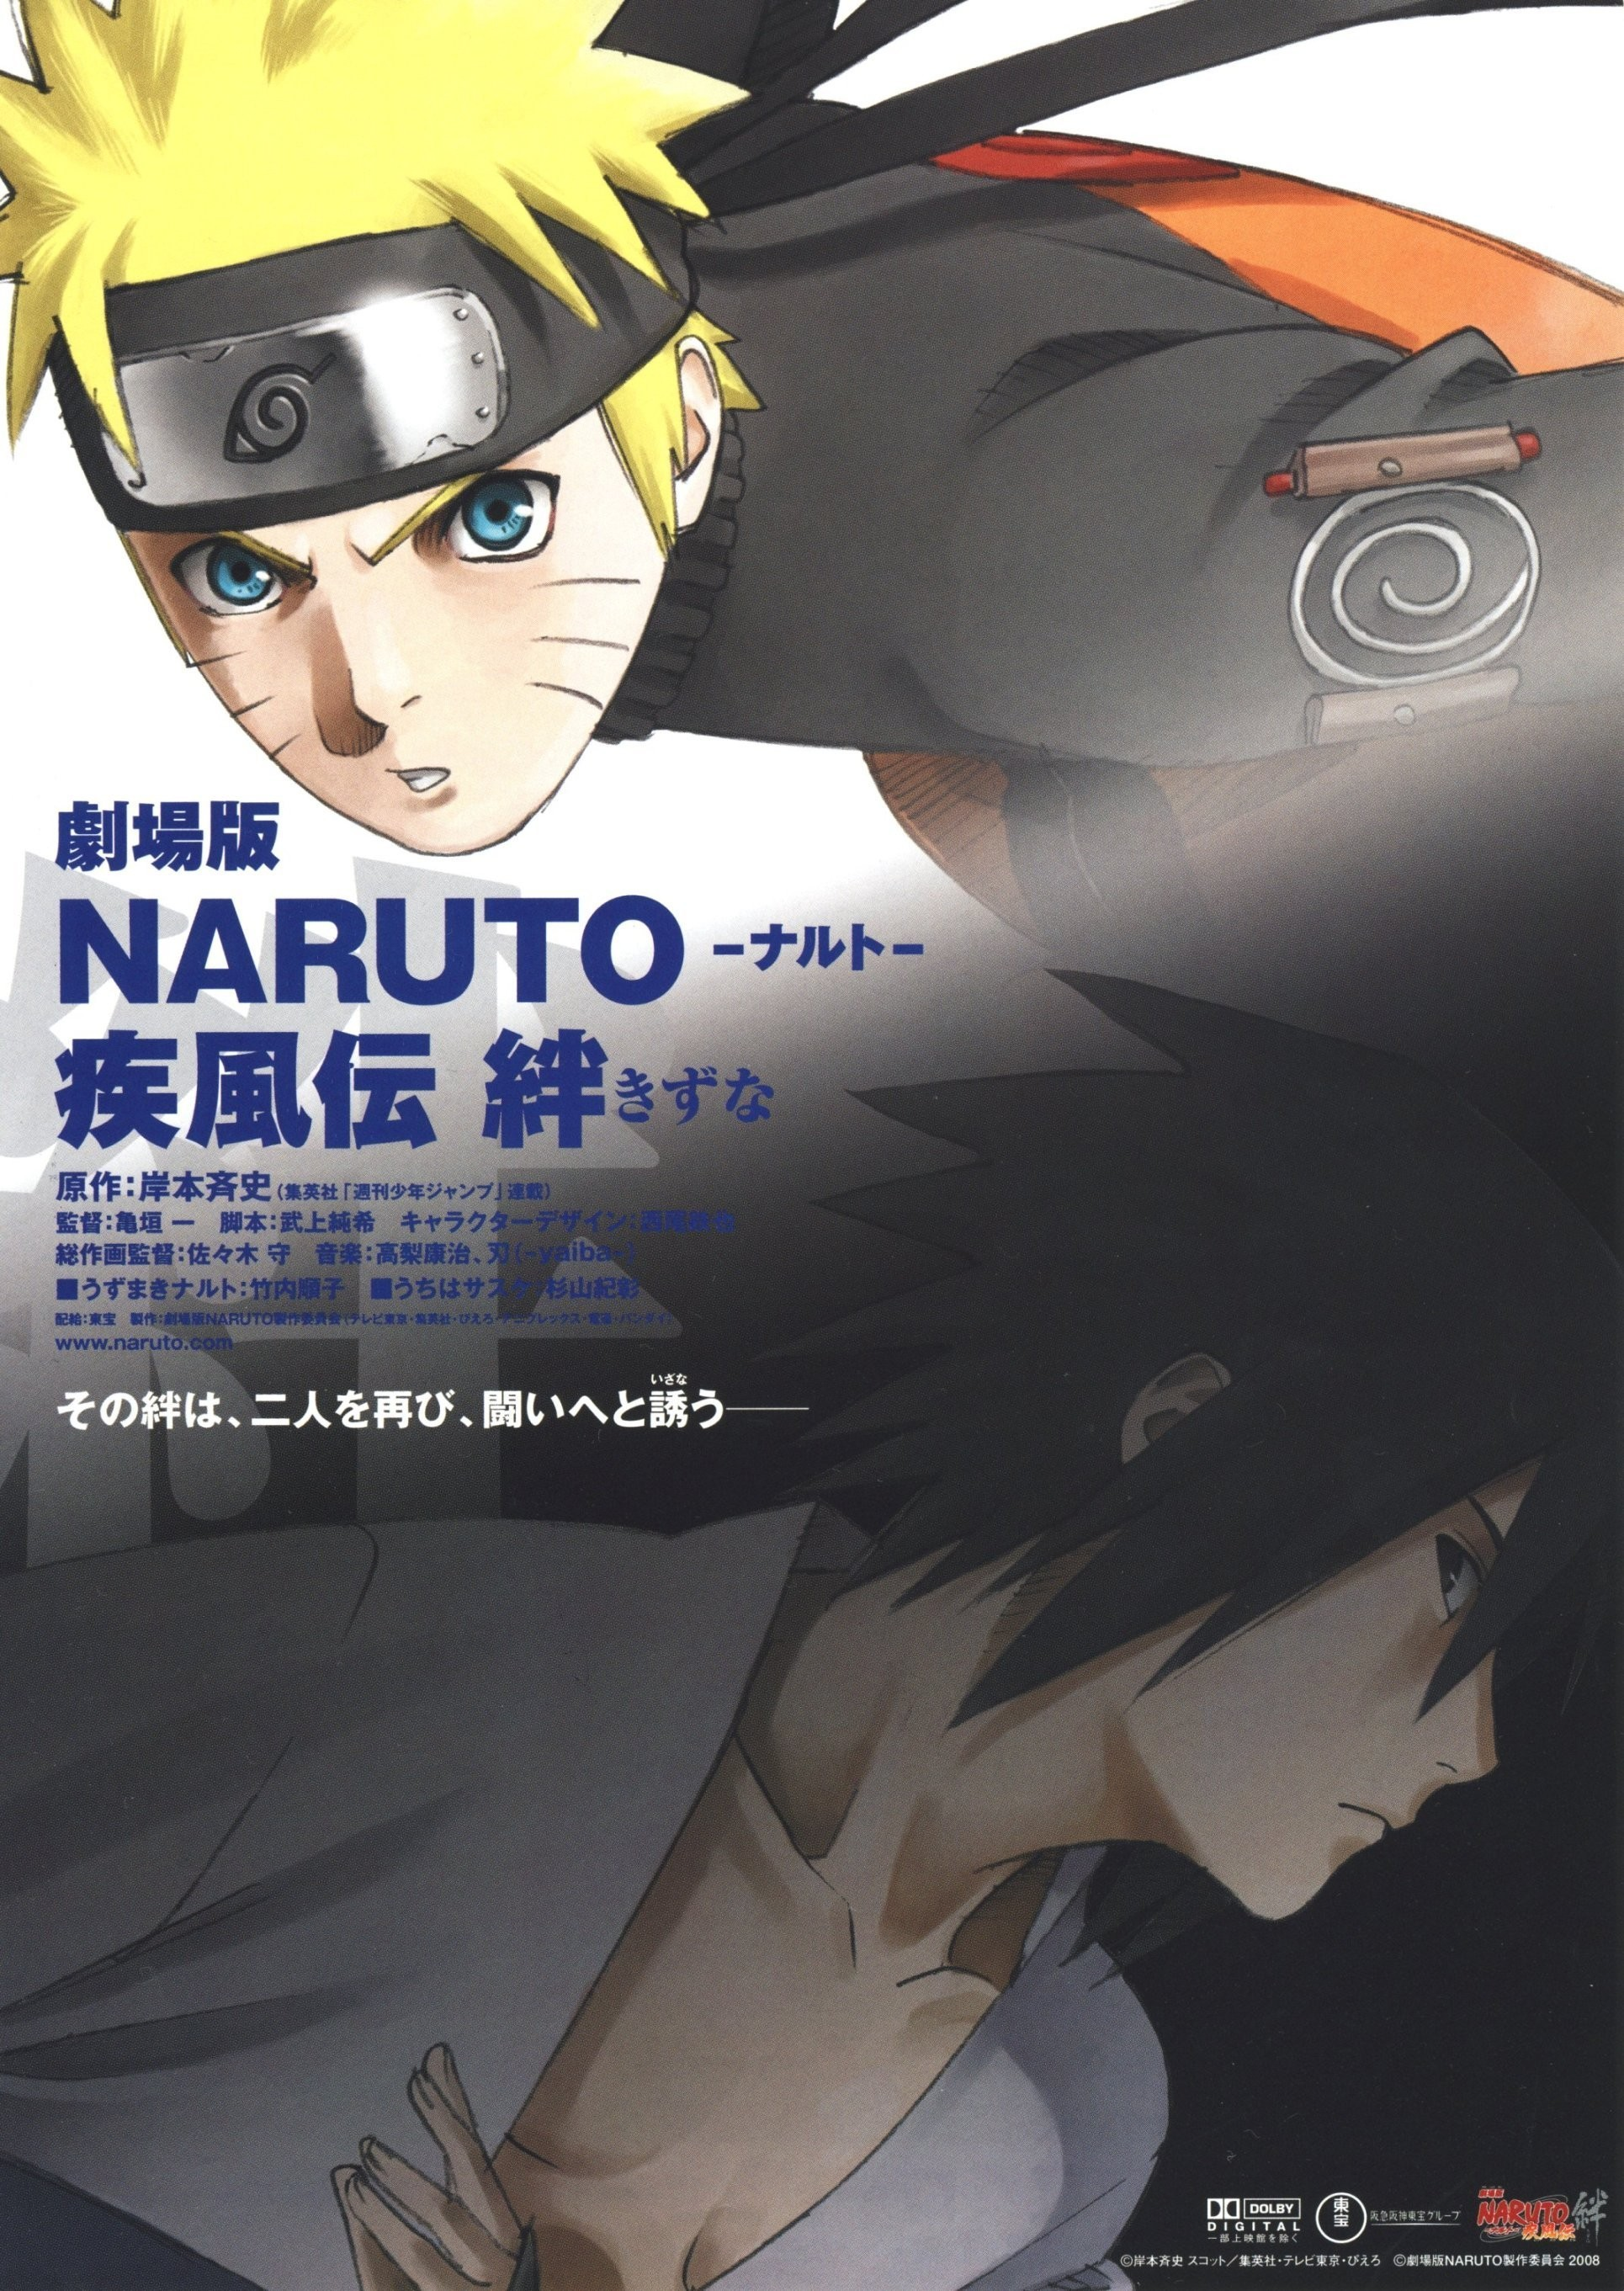 full list of naruto shippuden english dubbed episodes